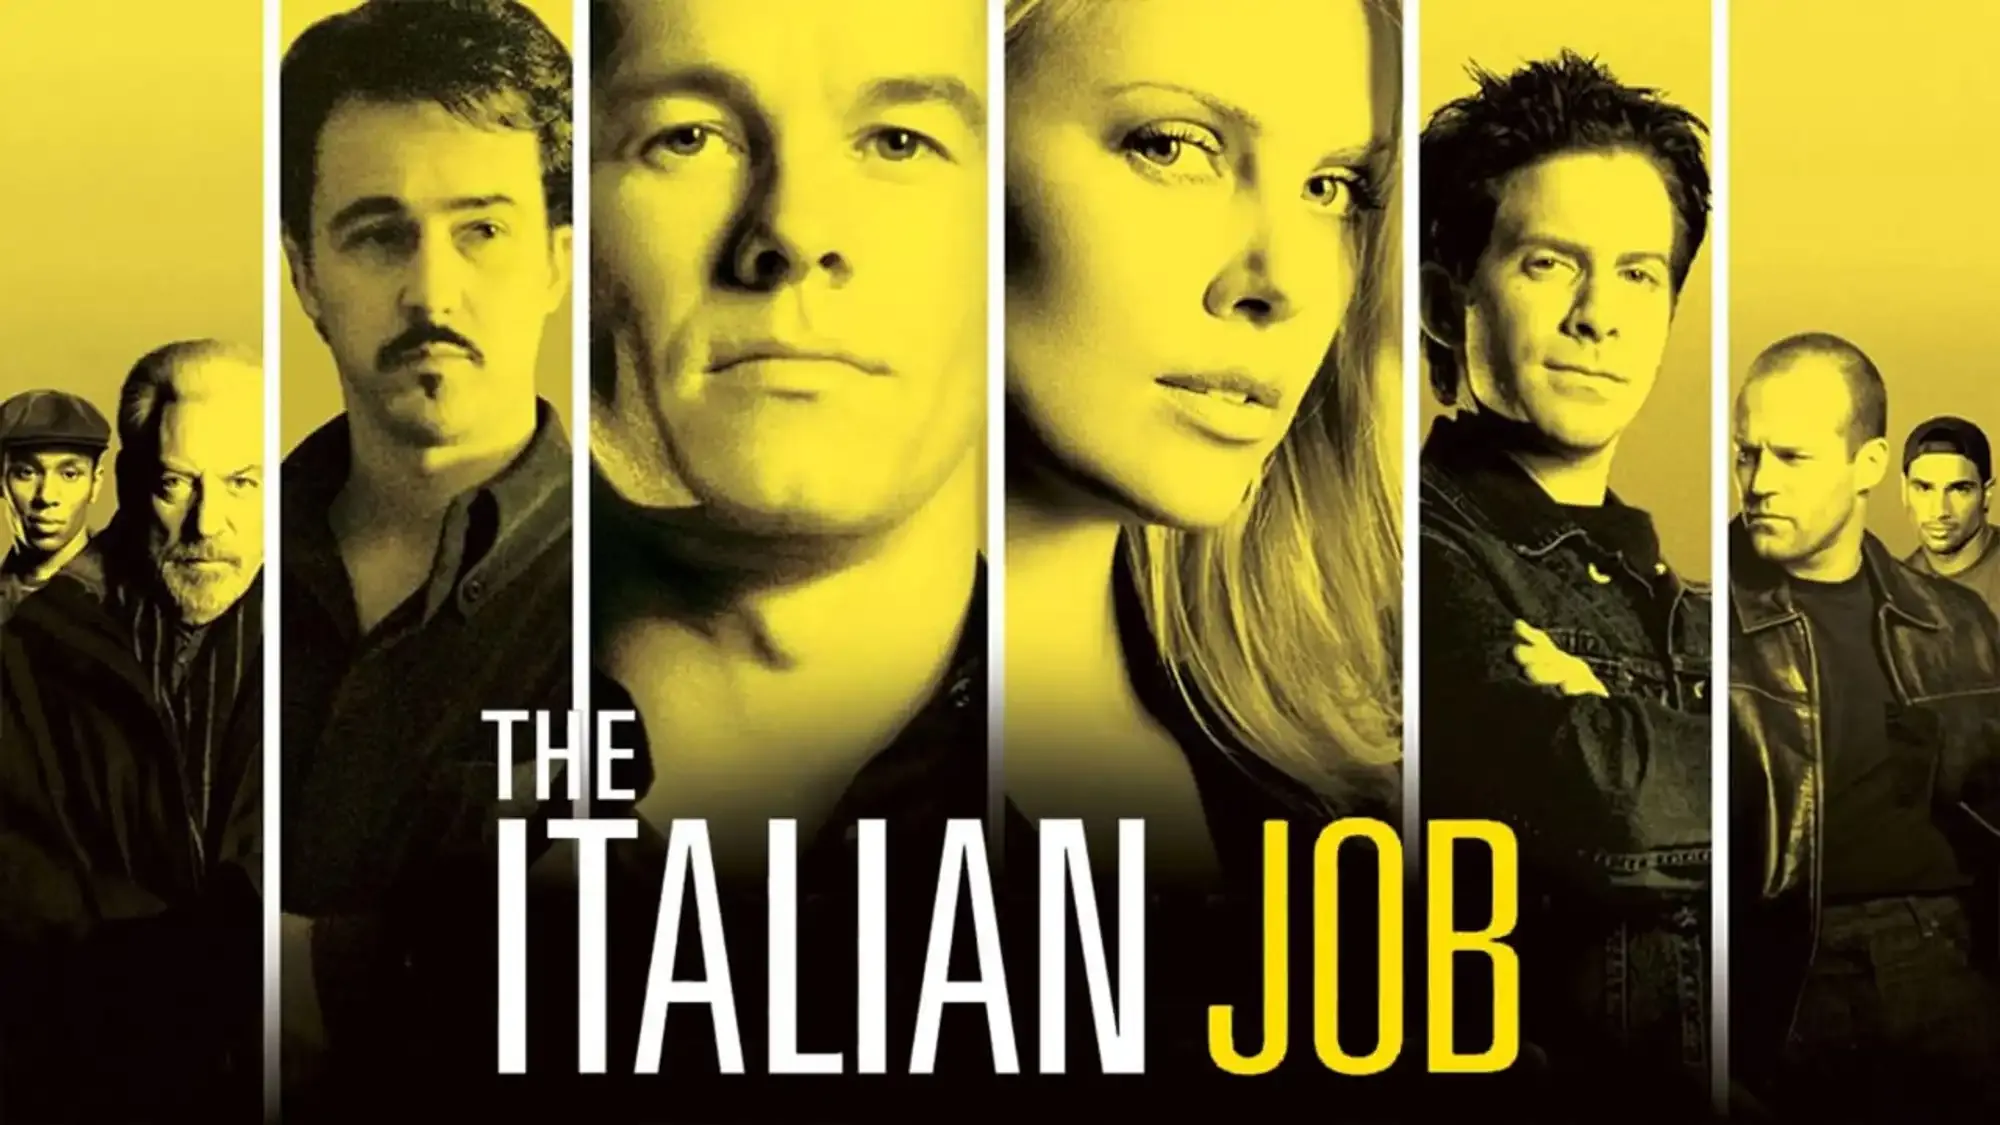 The Italian Job movie review